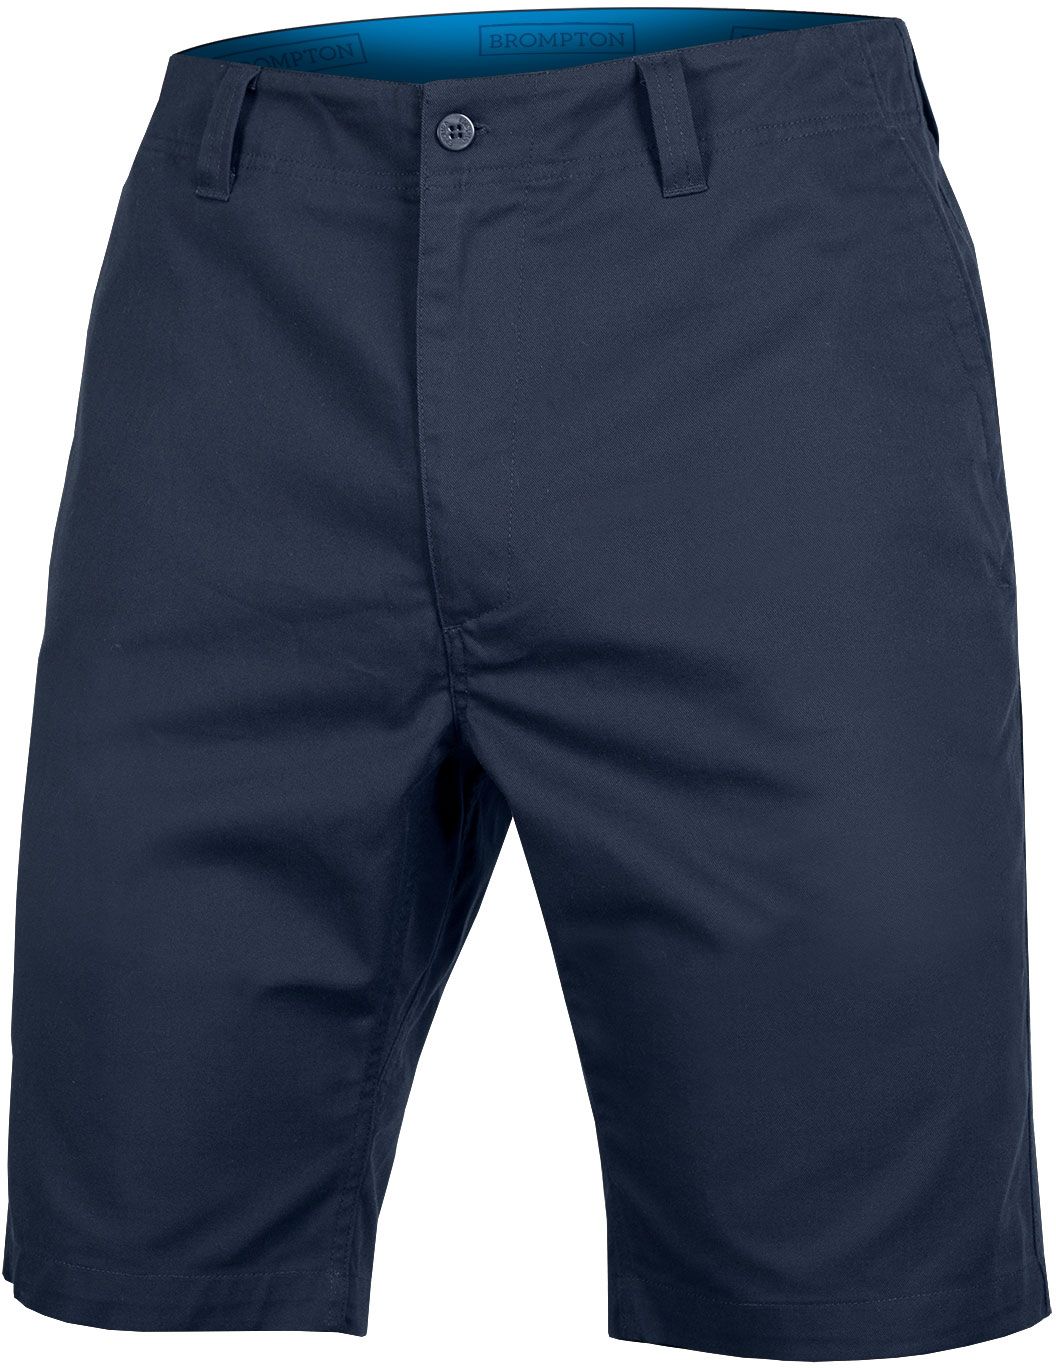 Endura Brompton New York Chino Shorts - Shorts - Cycle SuperStore